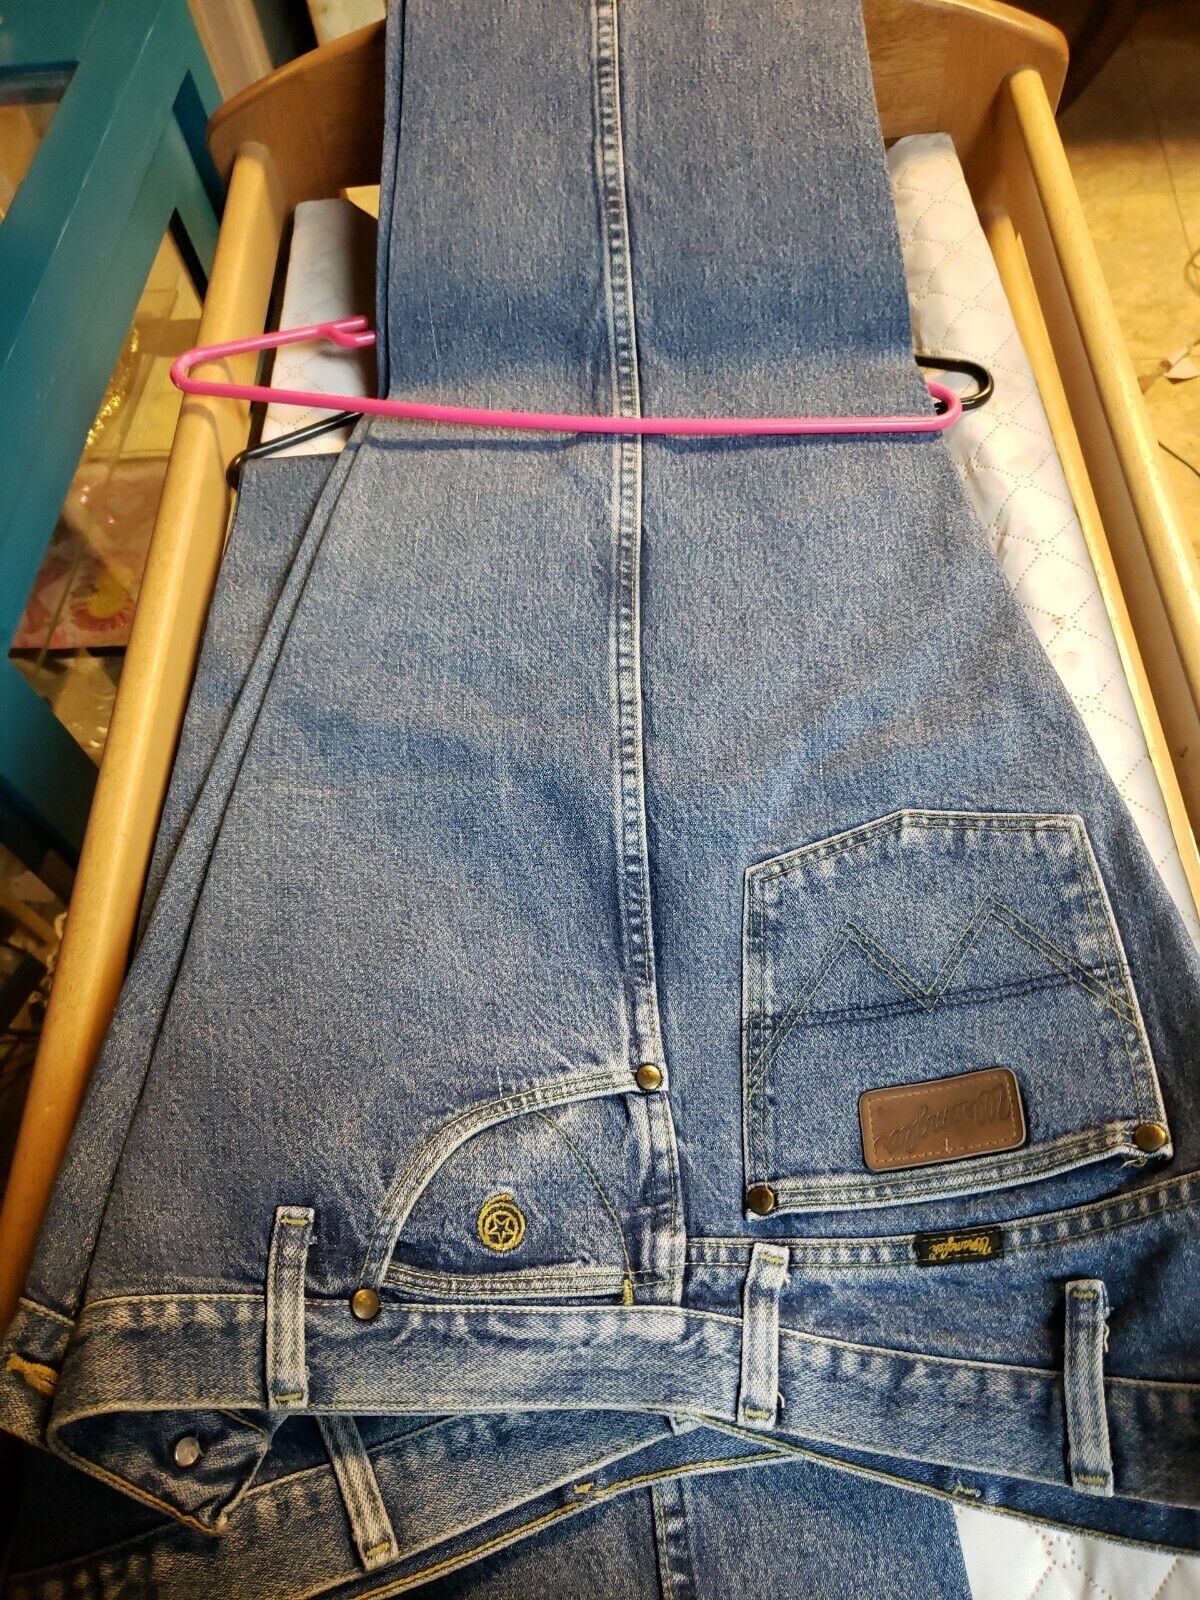 Wrangler George Strait Men's Jeans - Cowboy Cut Original Fit 13MGSSW - 40 x  32 | eBay